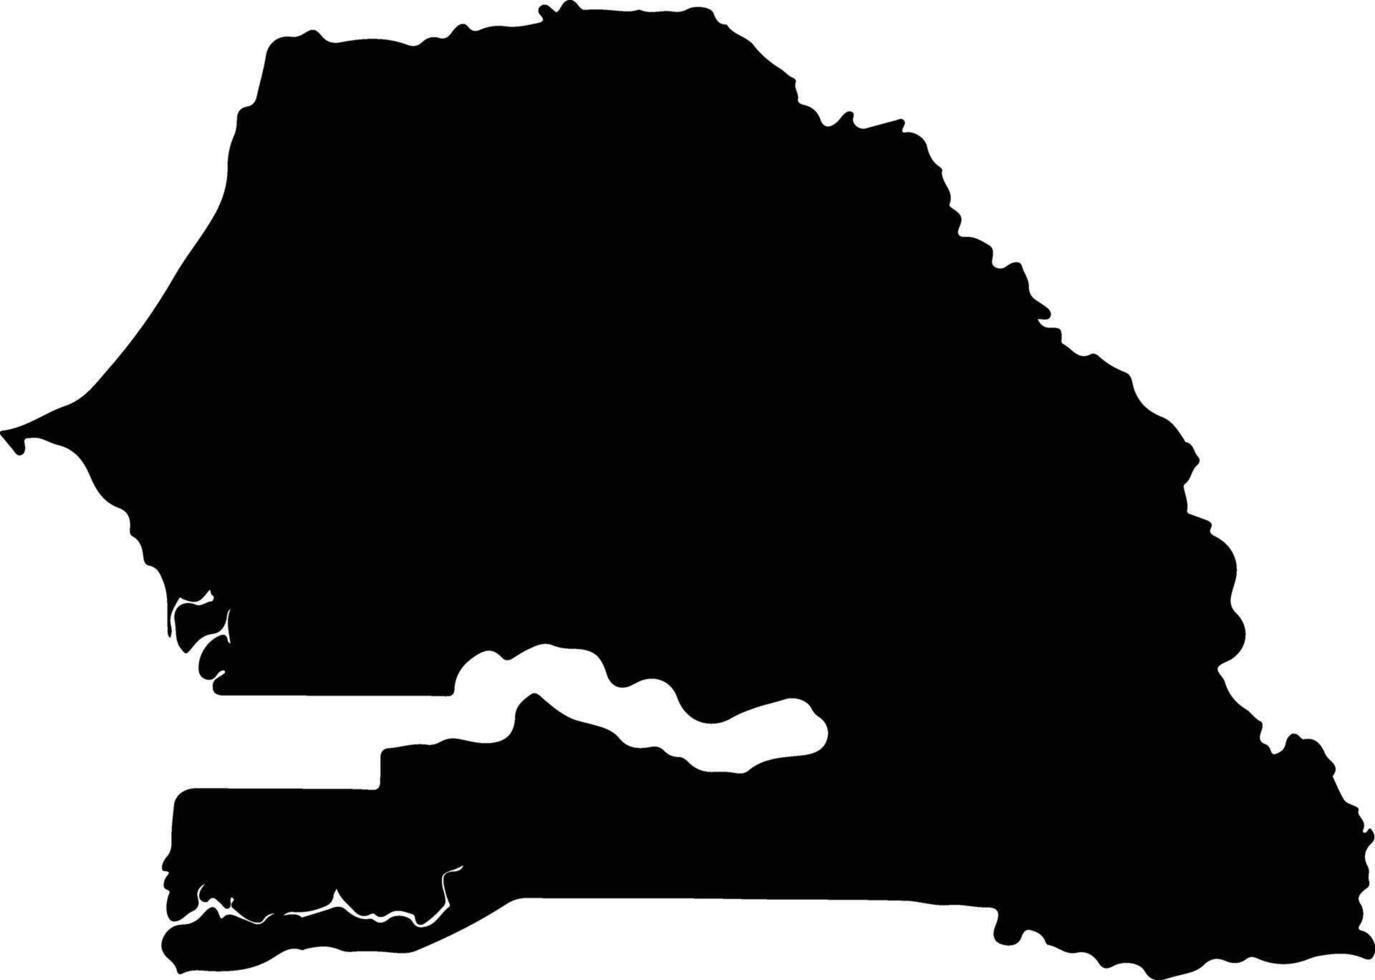 Senegal silhouette carta geografica vettore